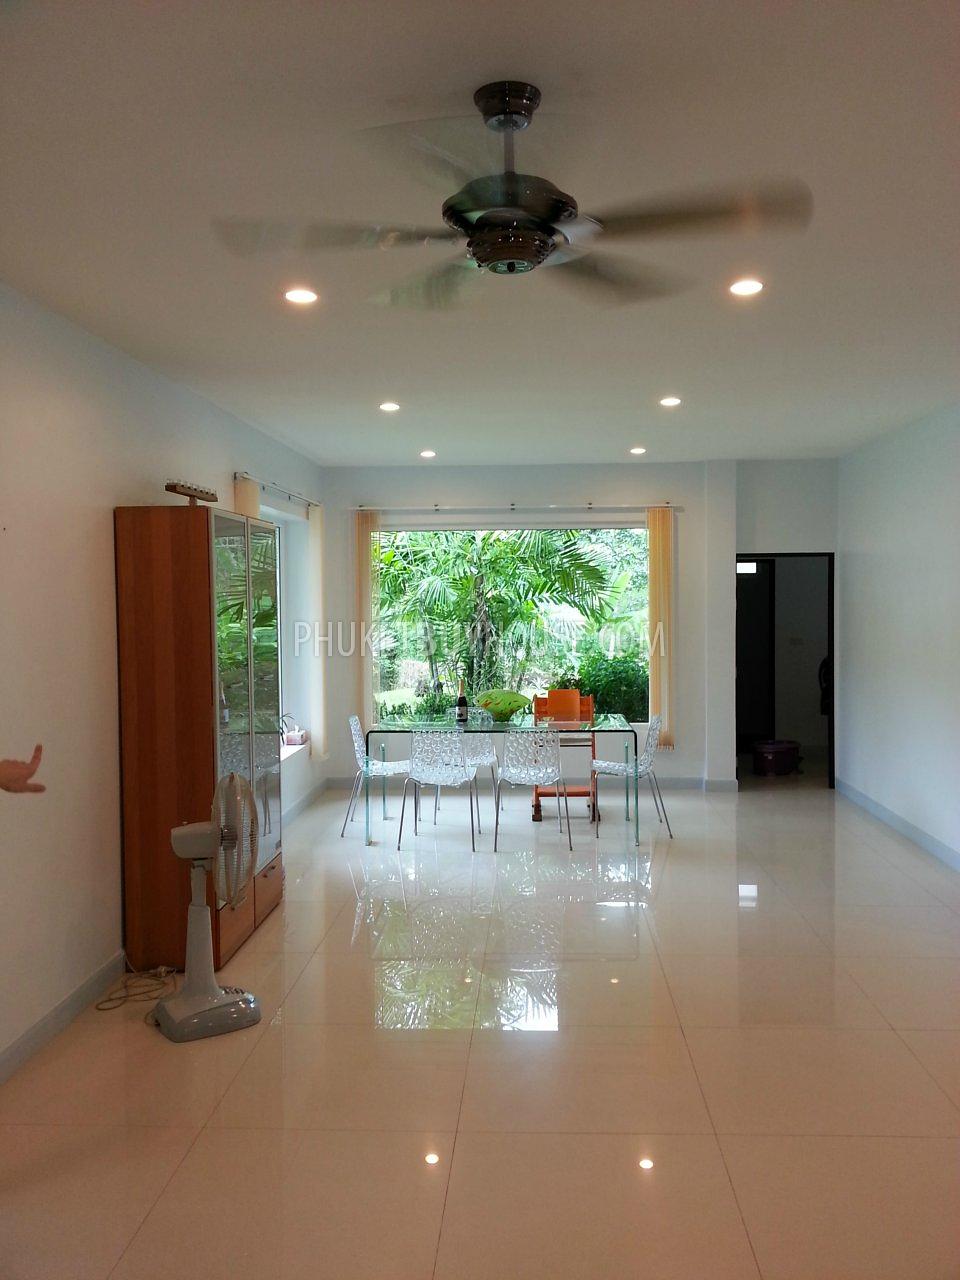 EAS3910: Hot! 4-bedroom modern pool villa on a 1 rai land plot near PIADS (UWC). Urgent sale!. Photo #40